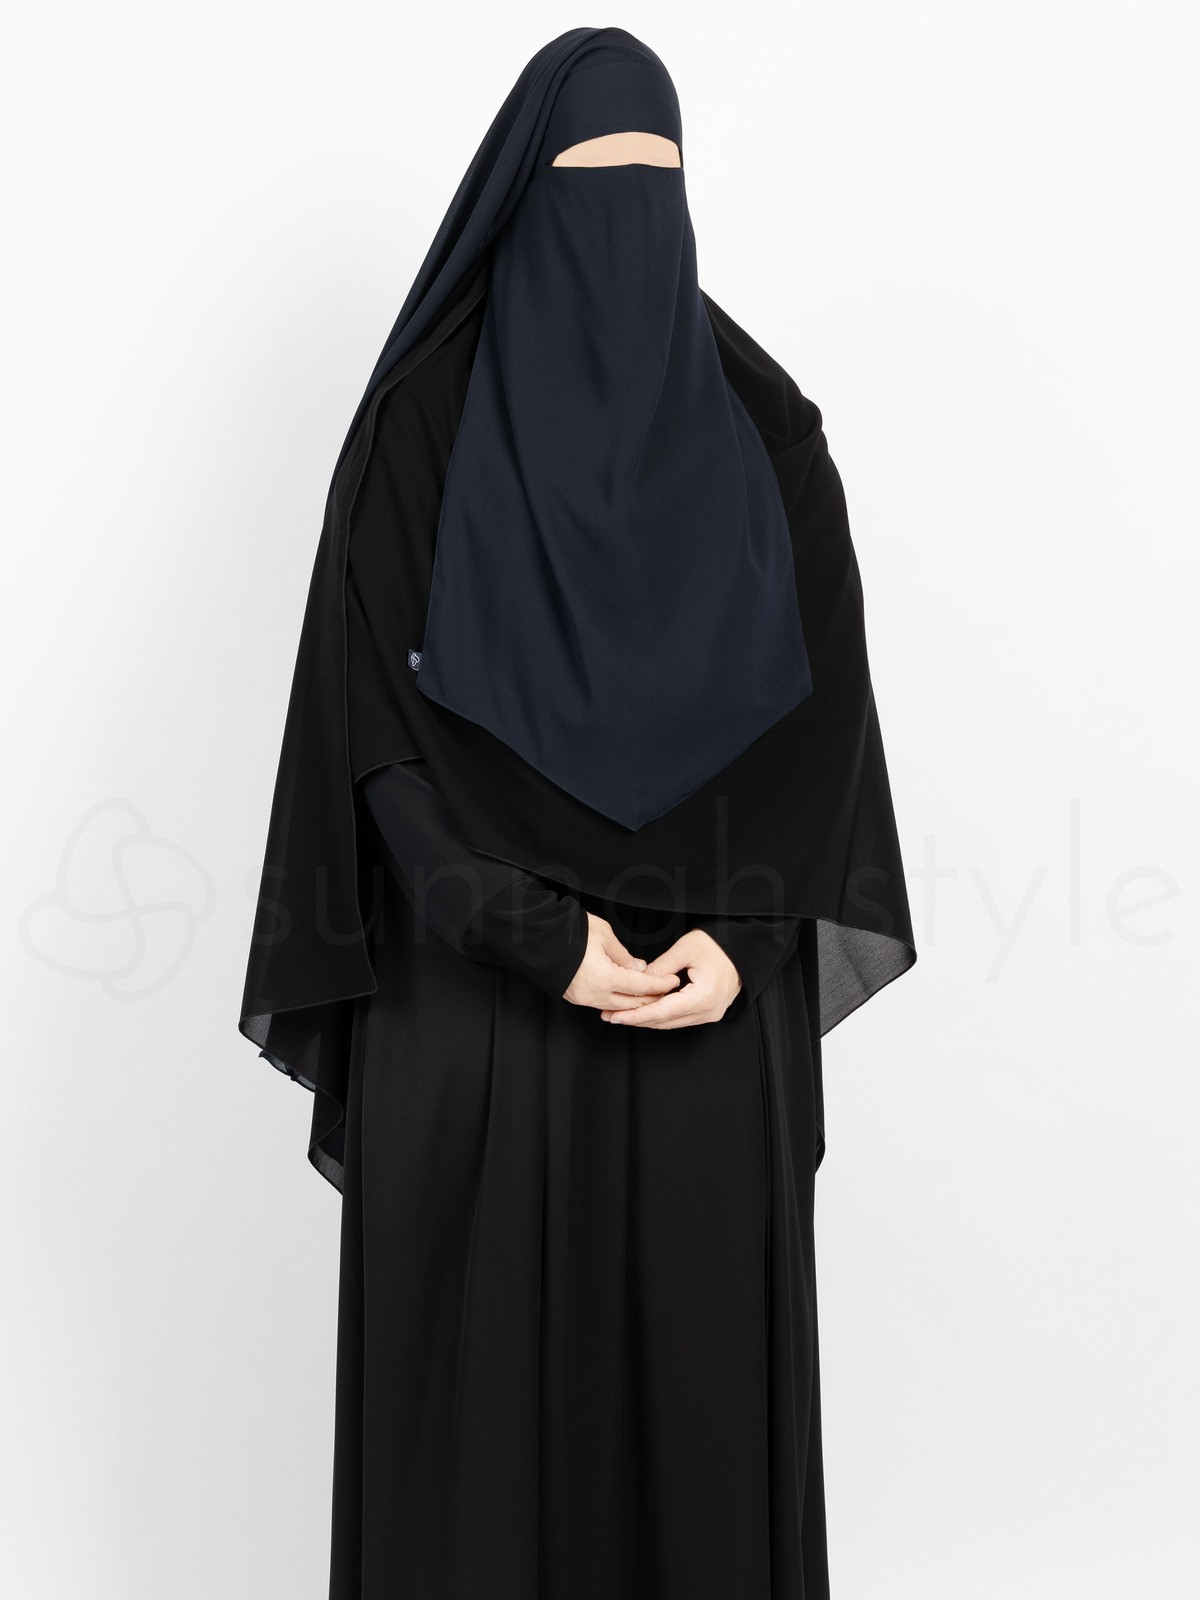 Sunnah Style - Extra Long Diamond Niqab (Navy Blue)